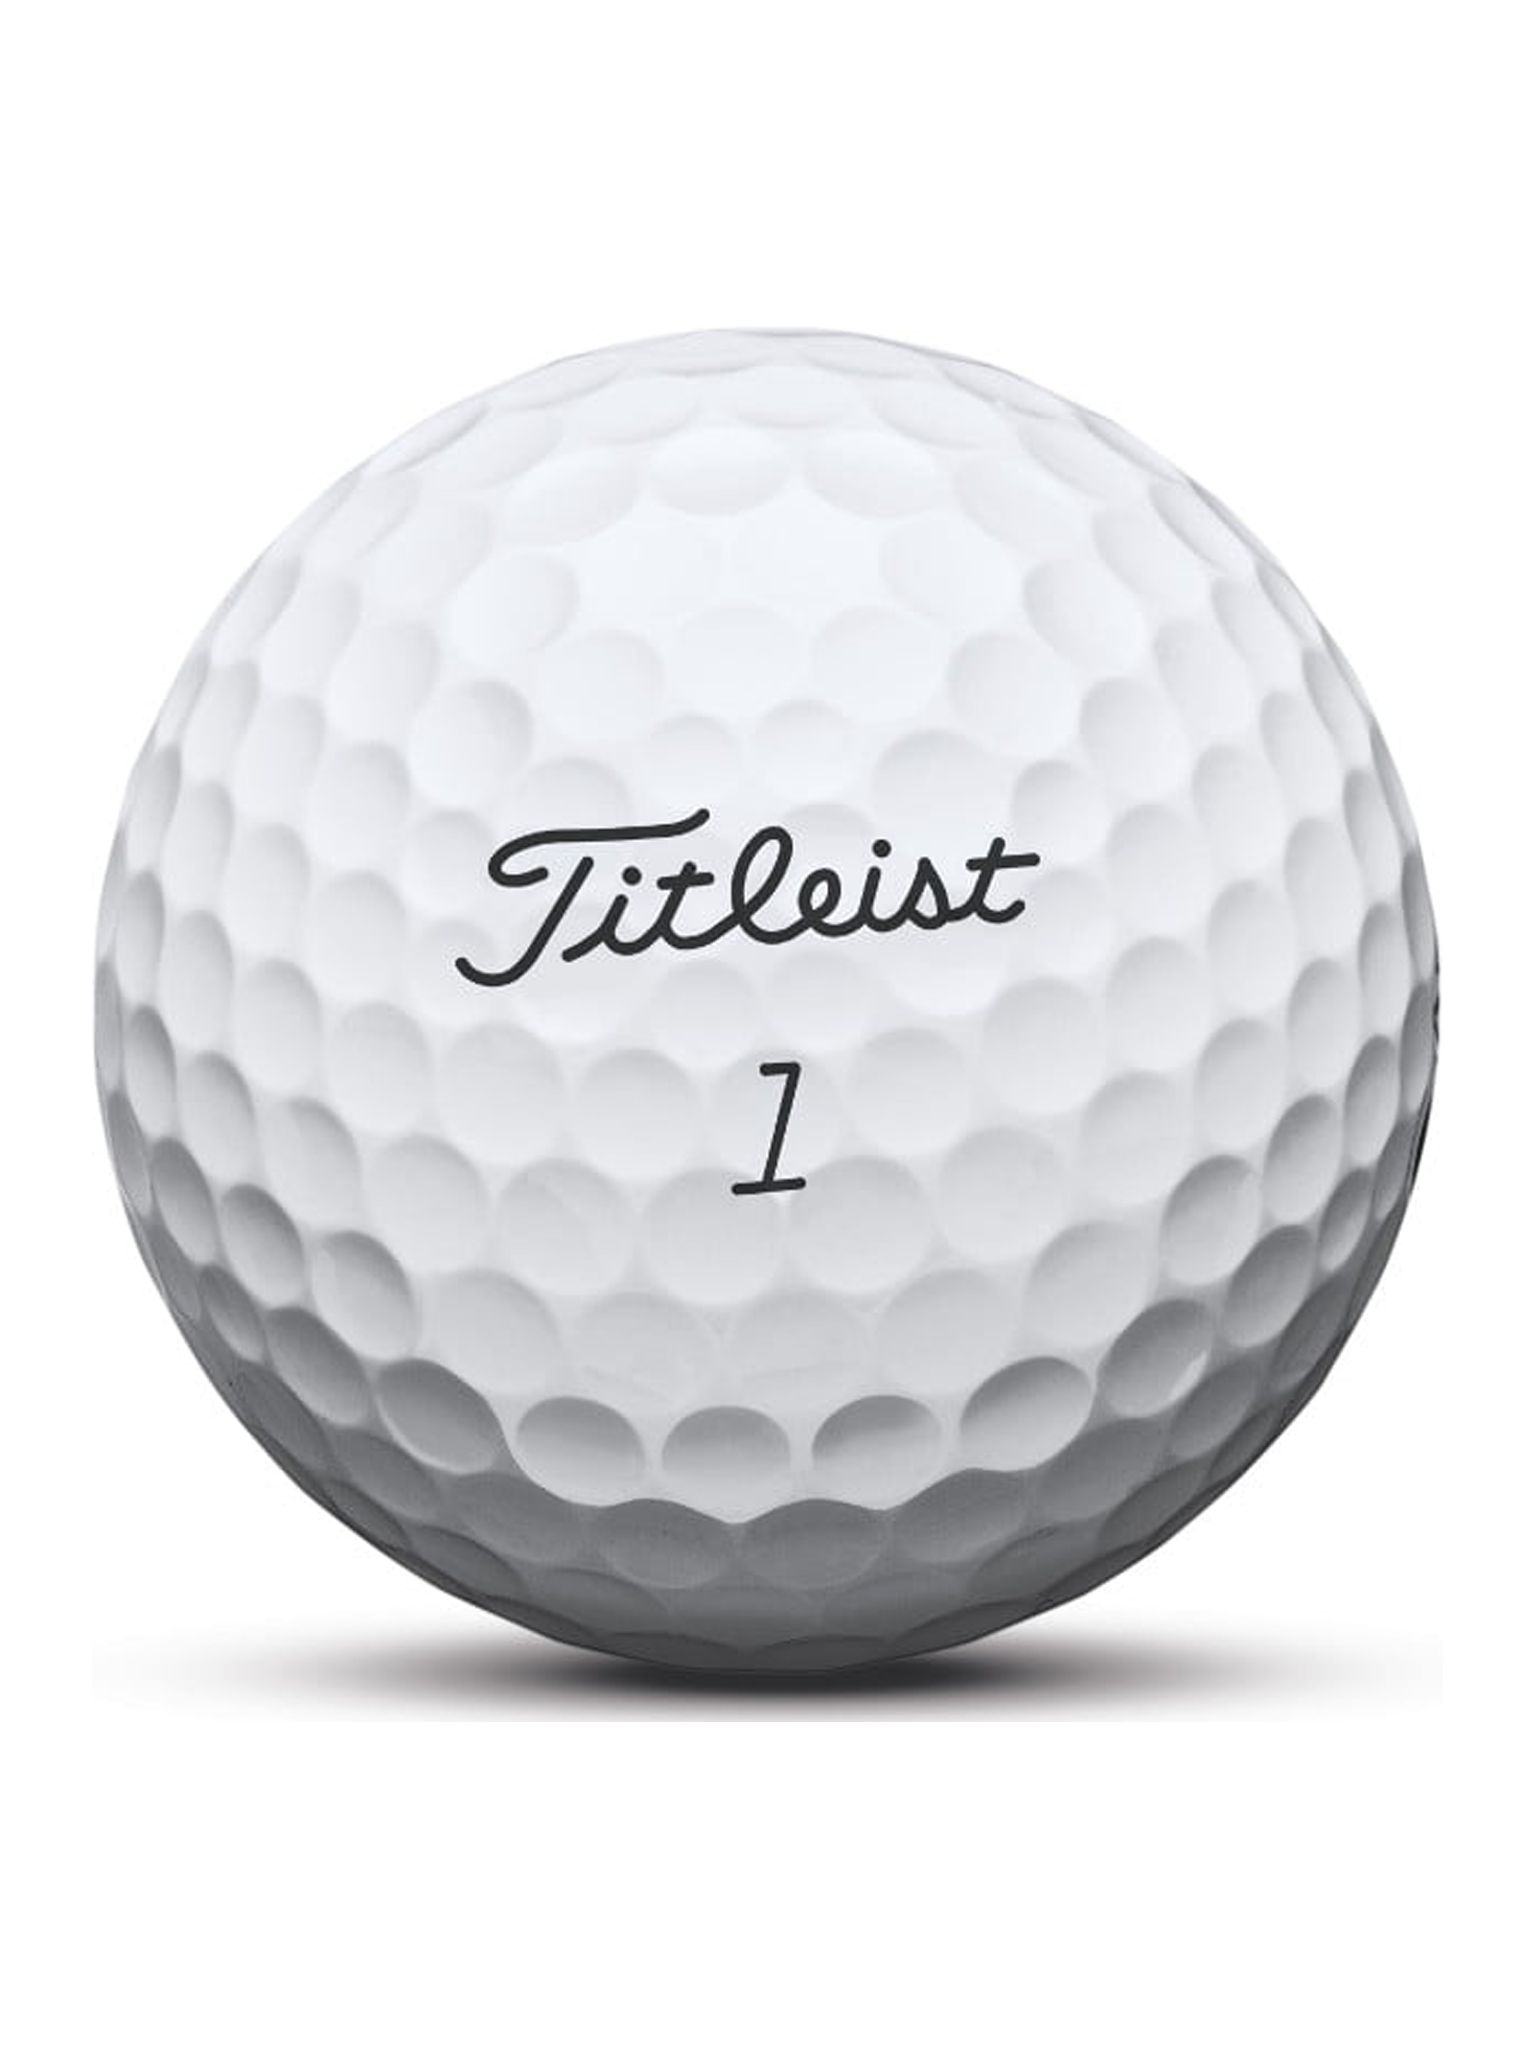 Titleist Pro V1 Golf Balls, Prior Generation, 12 Pack - image 3 of 5